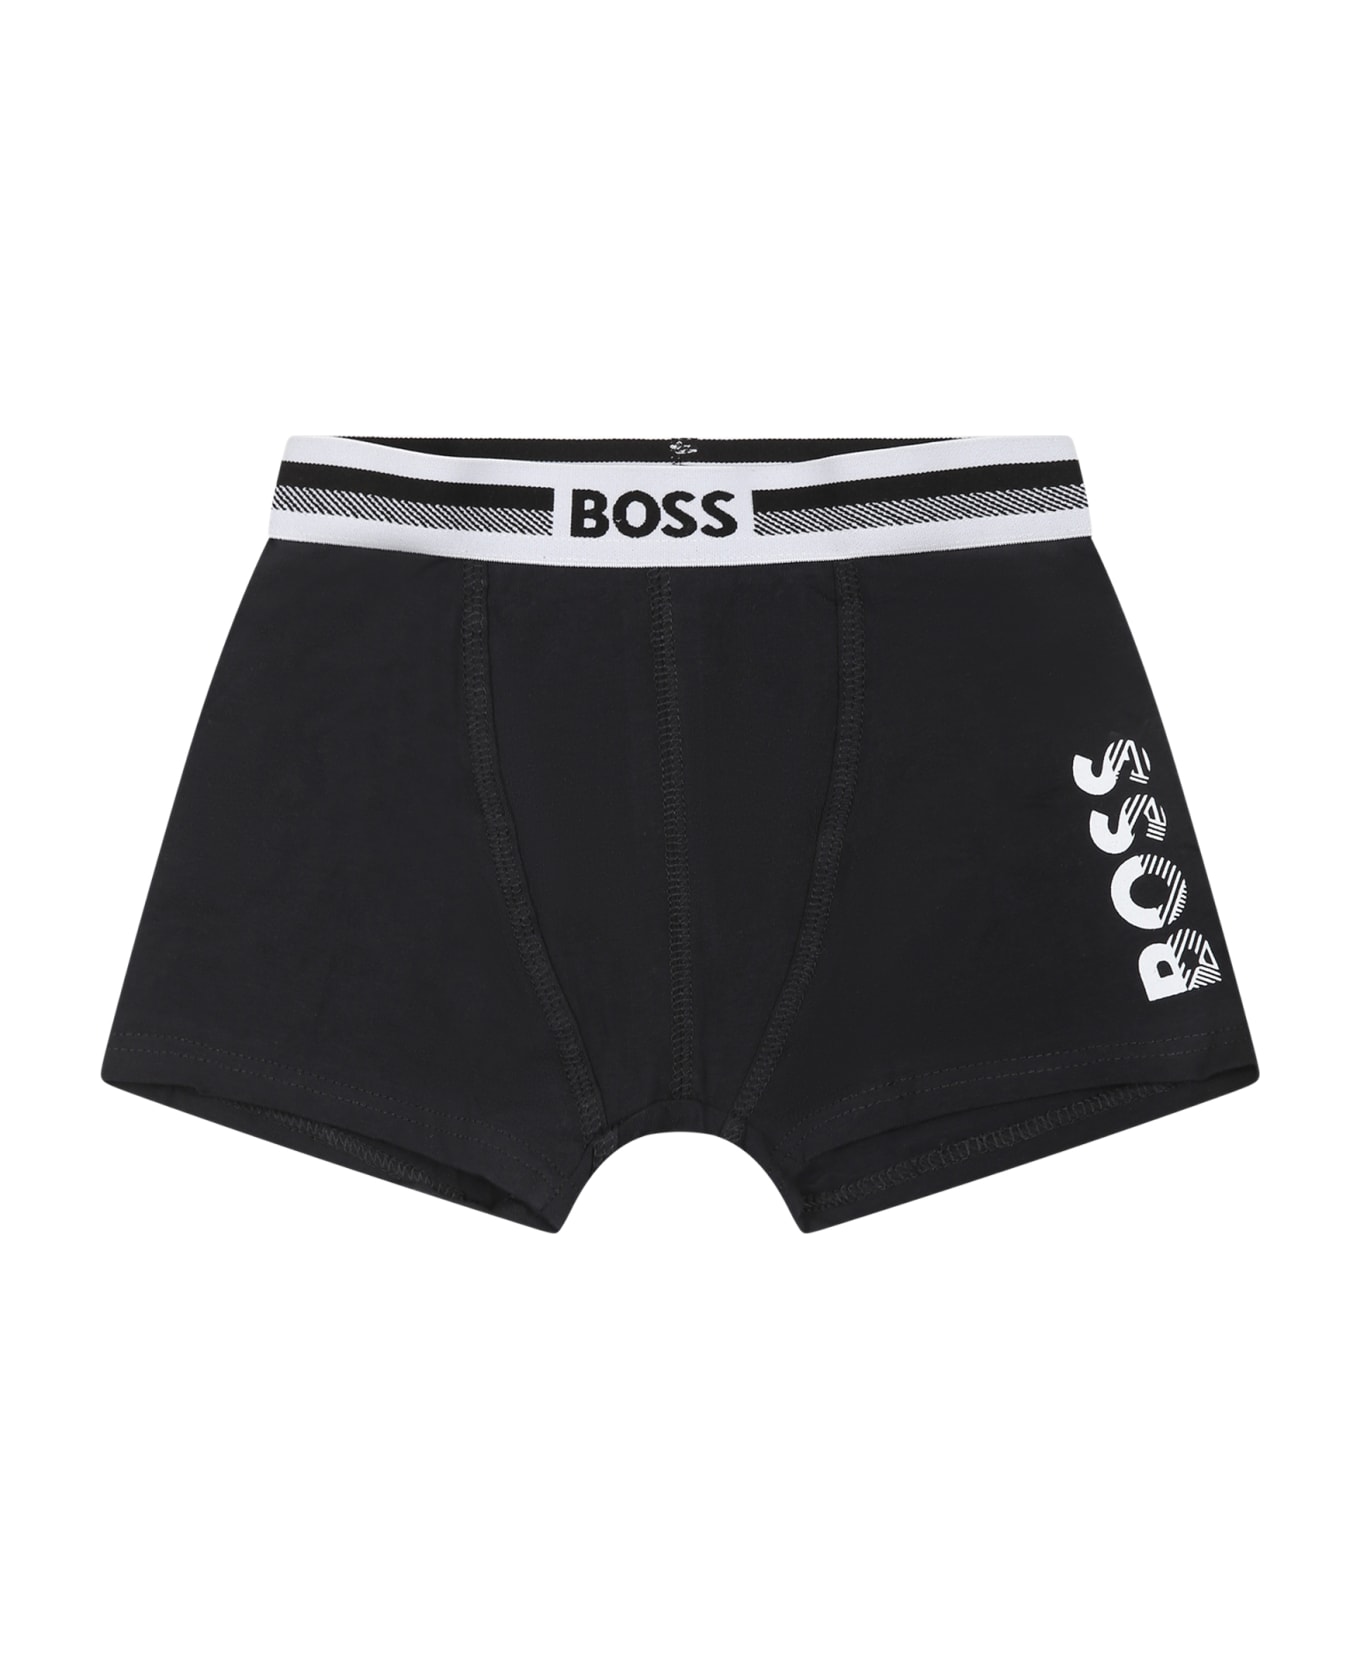 Hugo Boss Black Set For Boy With Logo - Black アンダーウェア